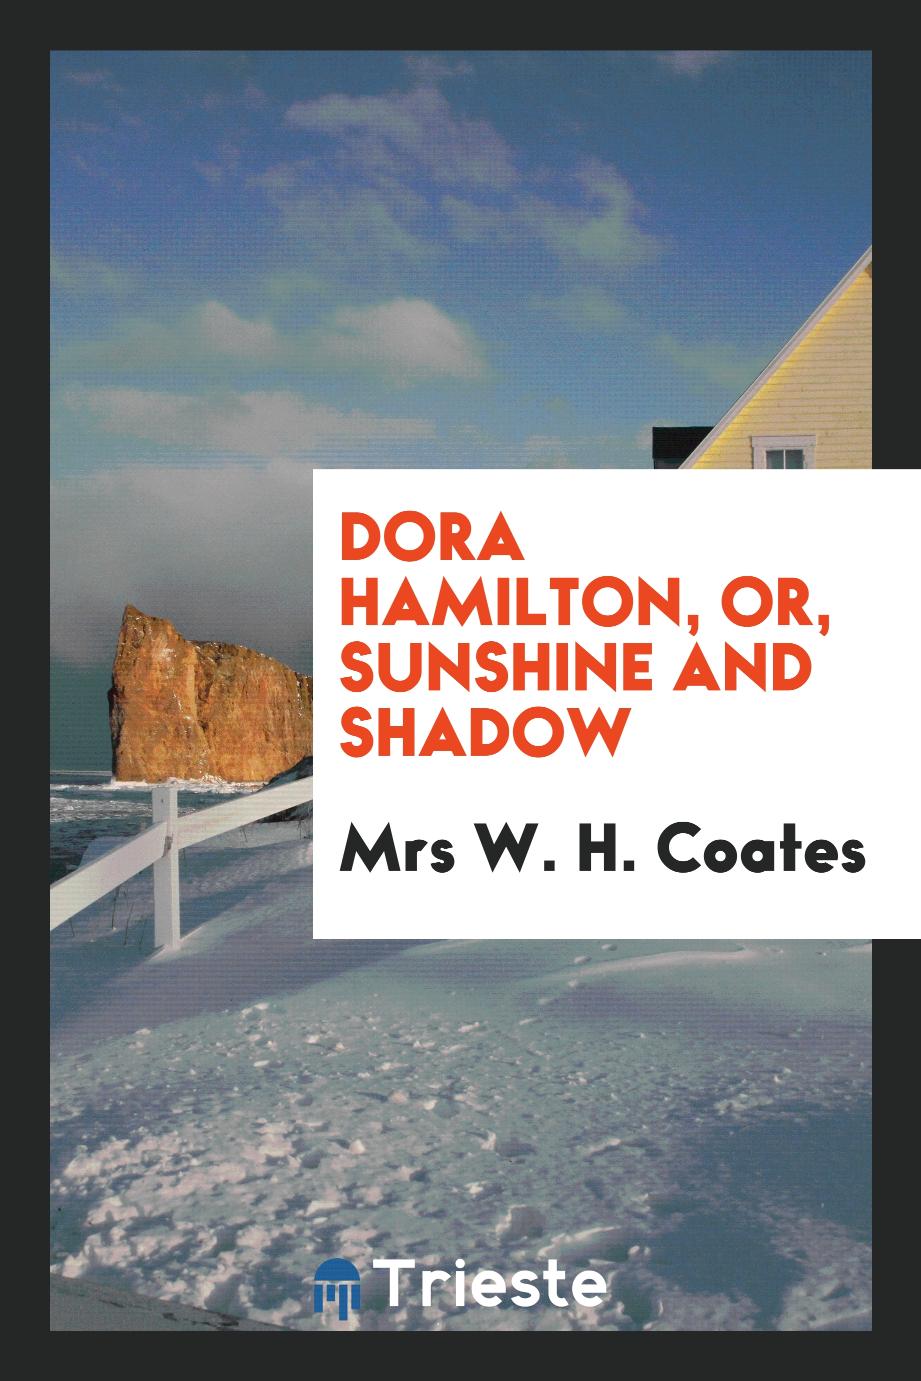 Dora Hamilton, or, Sunshine and shadow